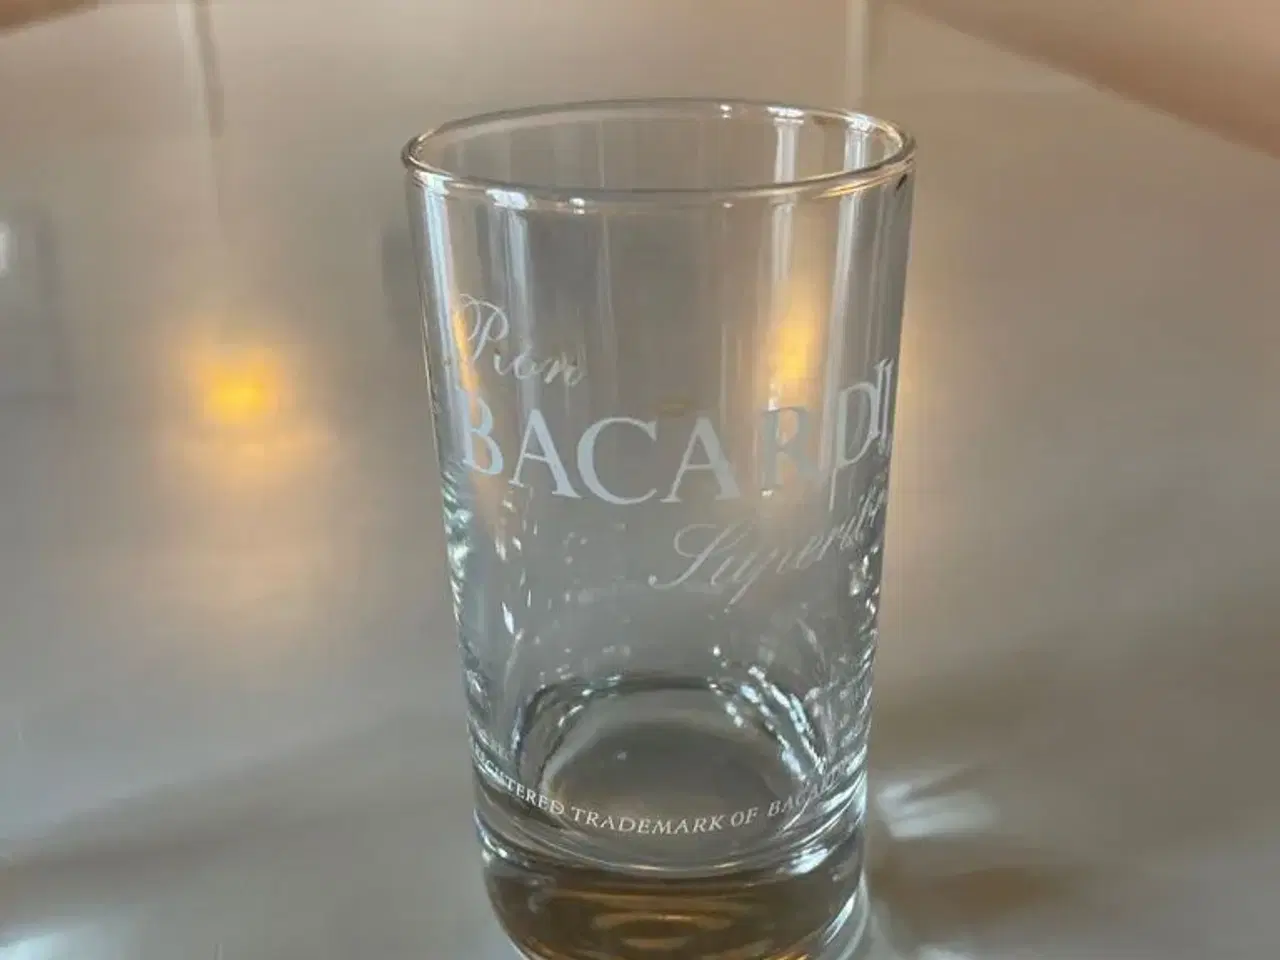 Billede 2 - Bacardi sjus glas.